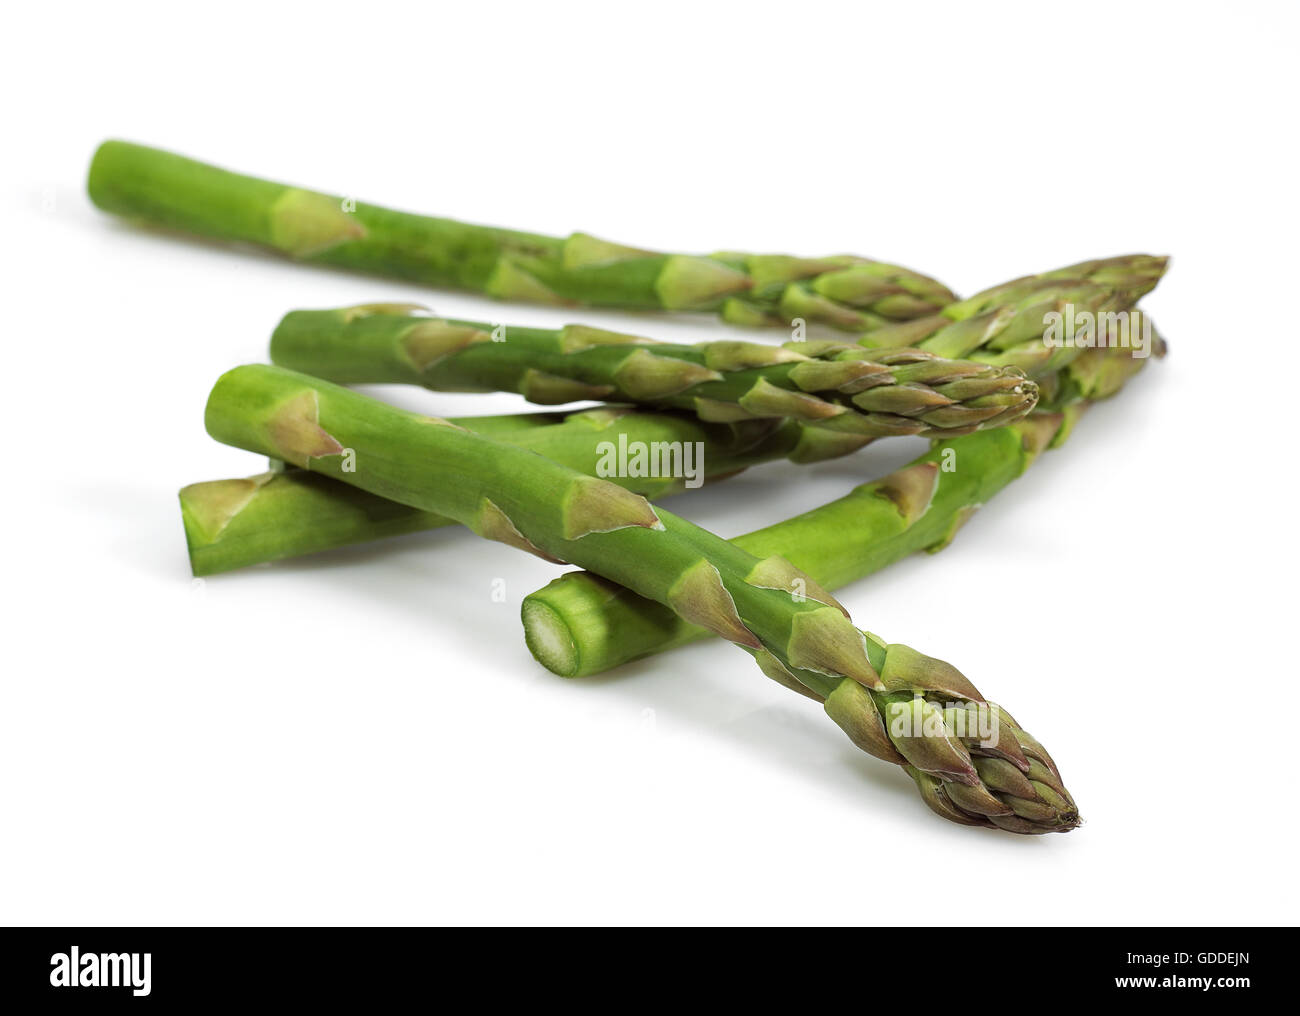 Asparagi verdi, Asparagus officinalis contro uno sfondo bianco Foto Stock